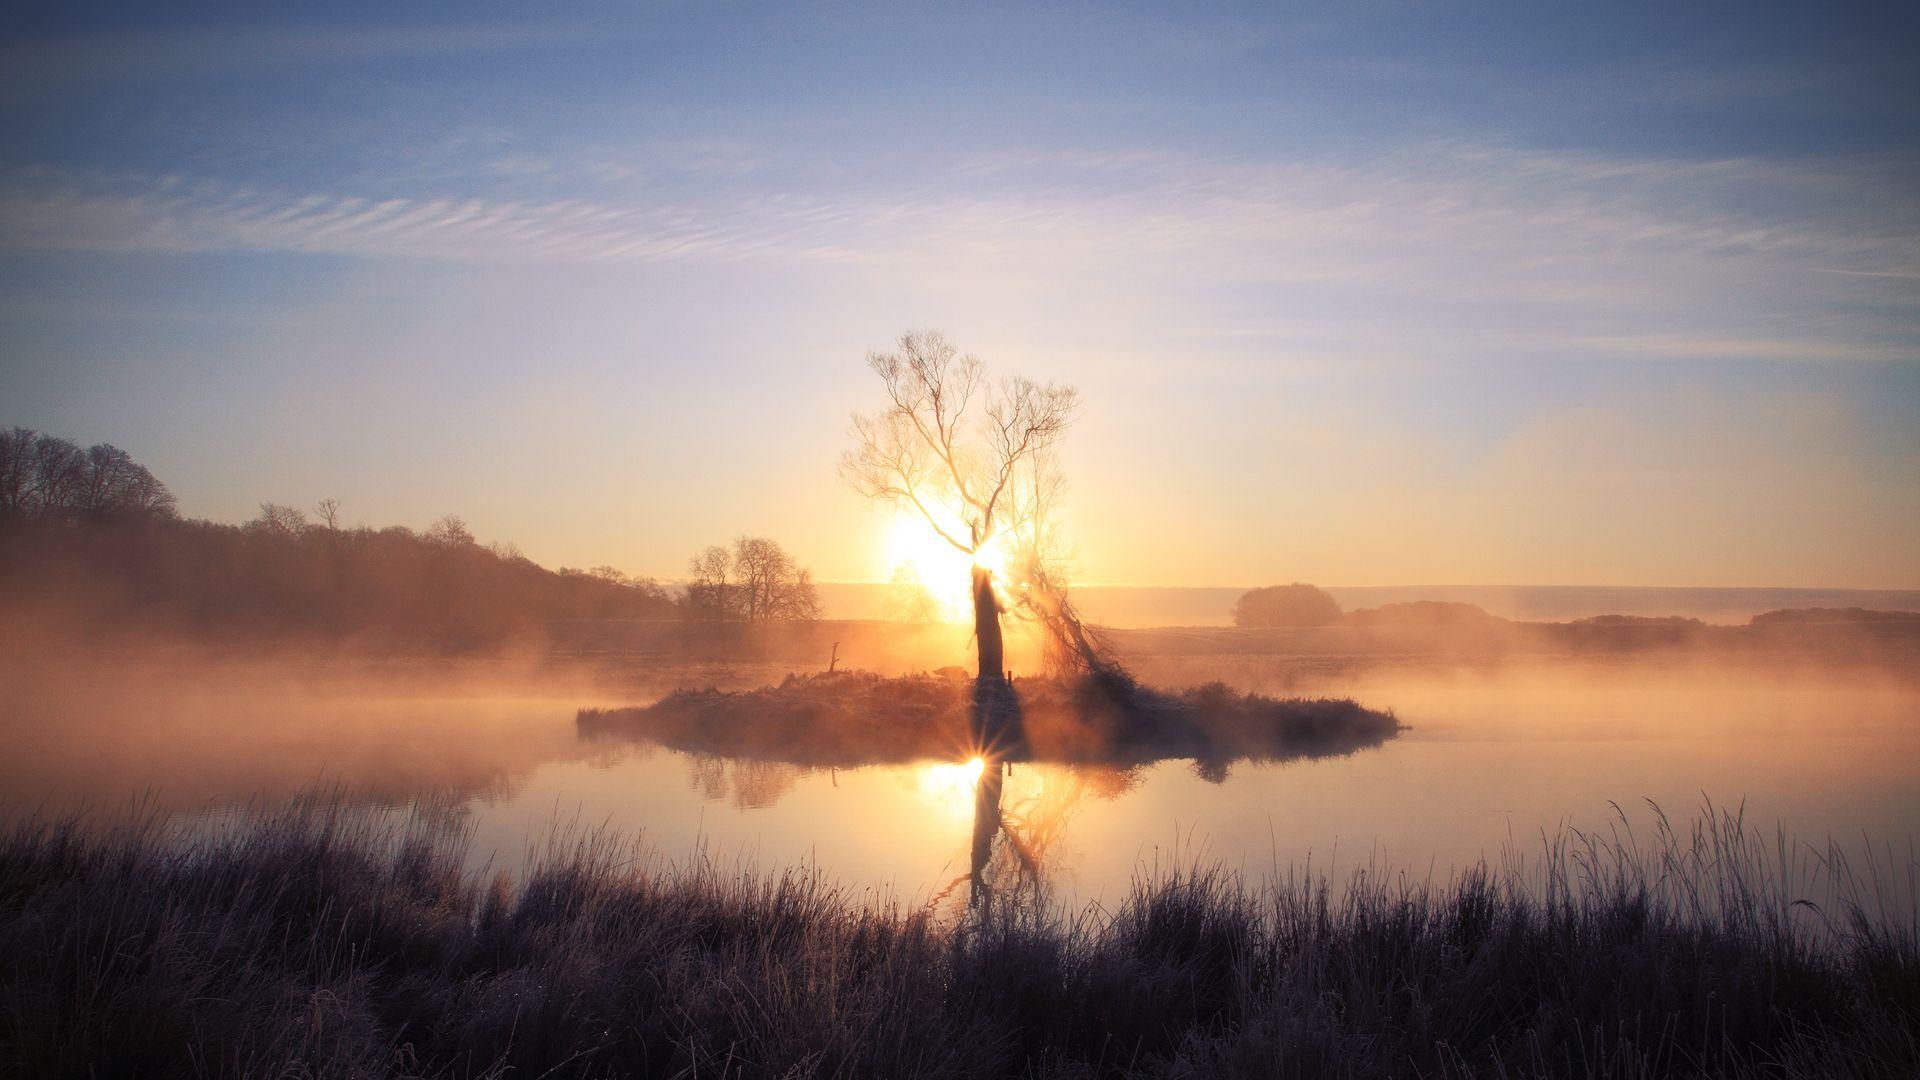 Download 1920x1080 landscapes lakes reflection fog mist dawn